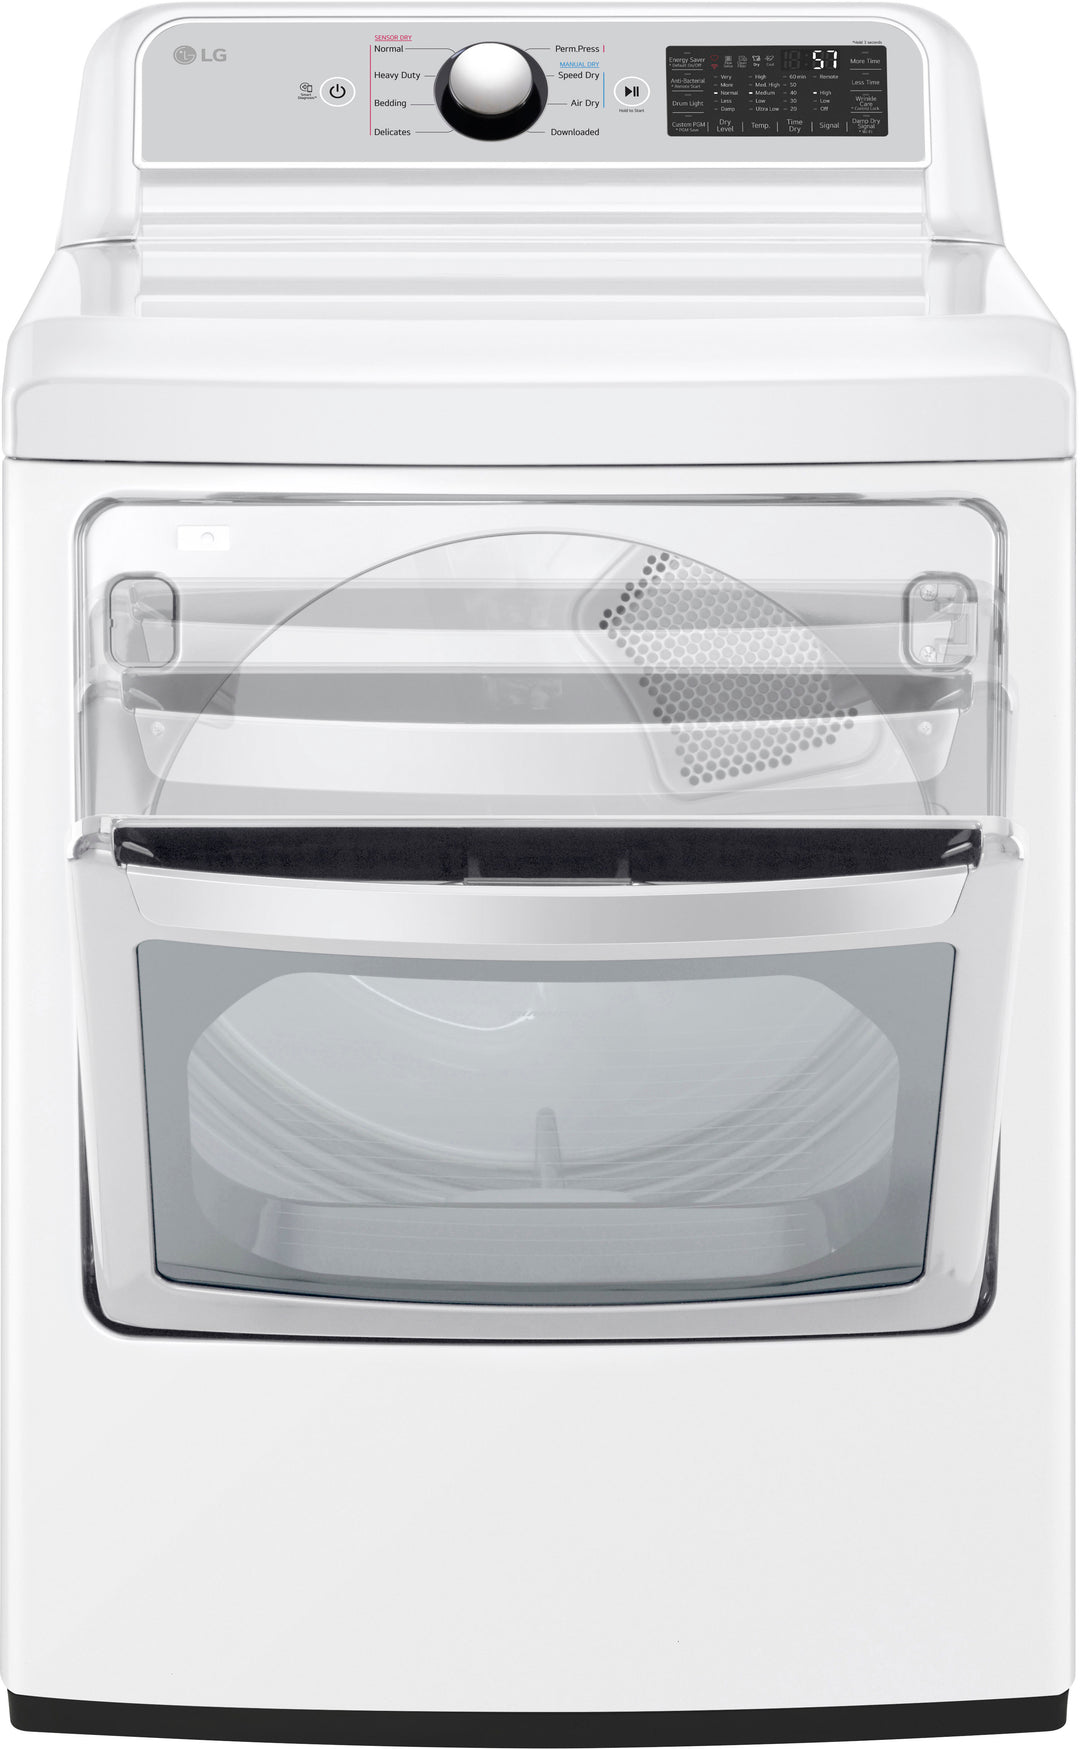 LG - 7.3 Cu. Ft. Smart Electric Dryer with EasyLoad Door - White_3